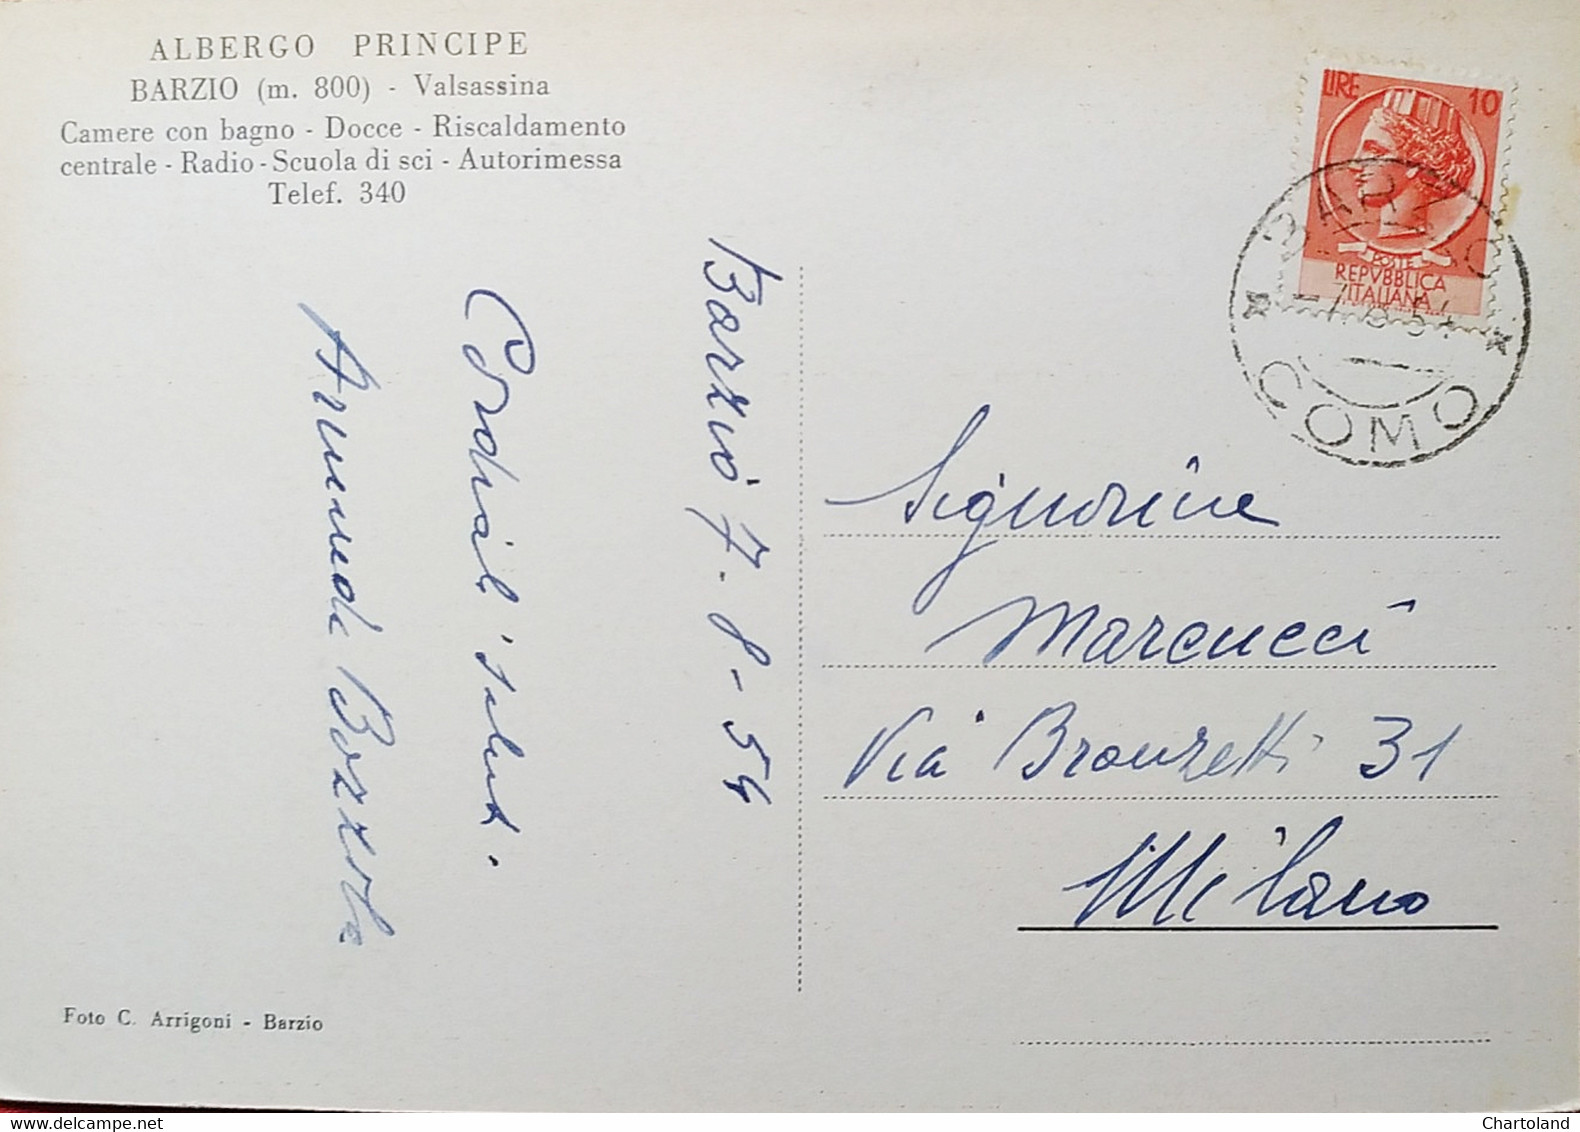 Cartolina - Albergo Principe - Barzio - Valsassina - 1954 - Lecco